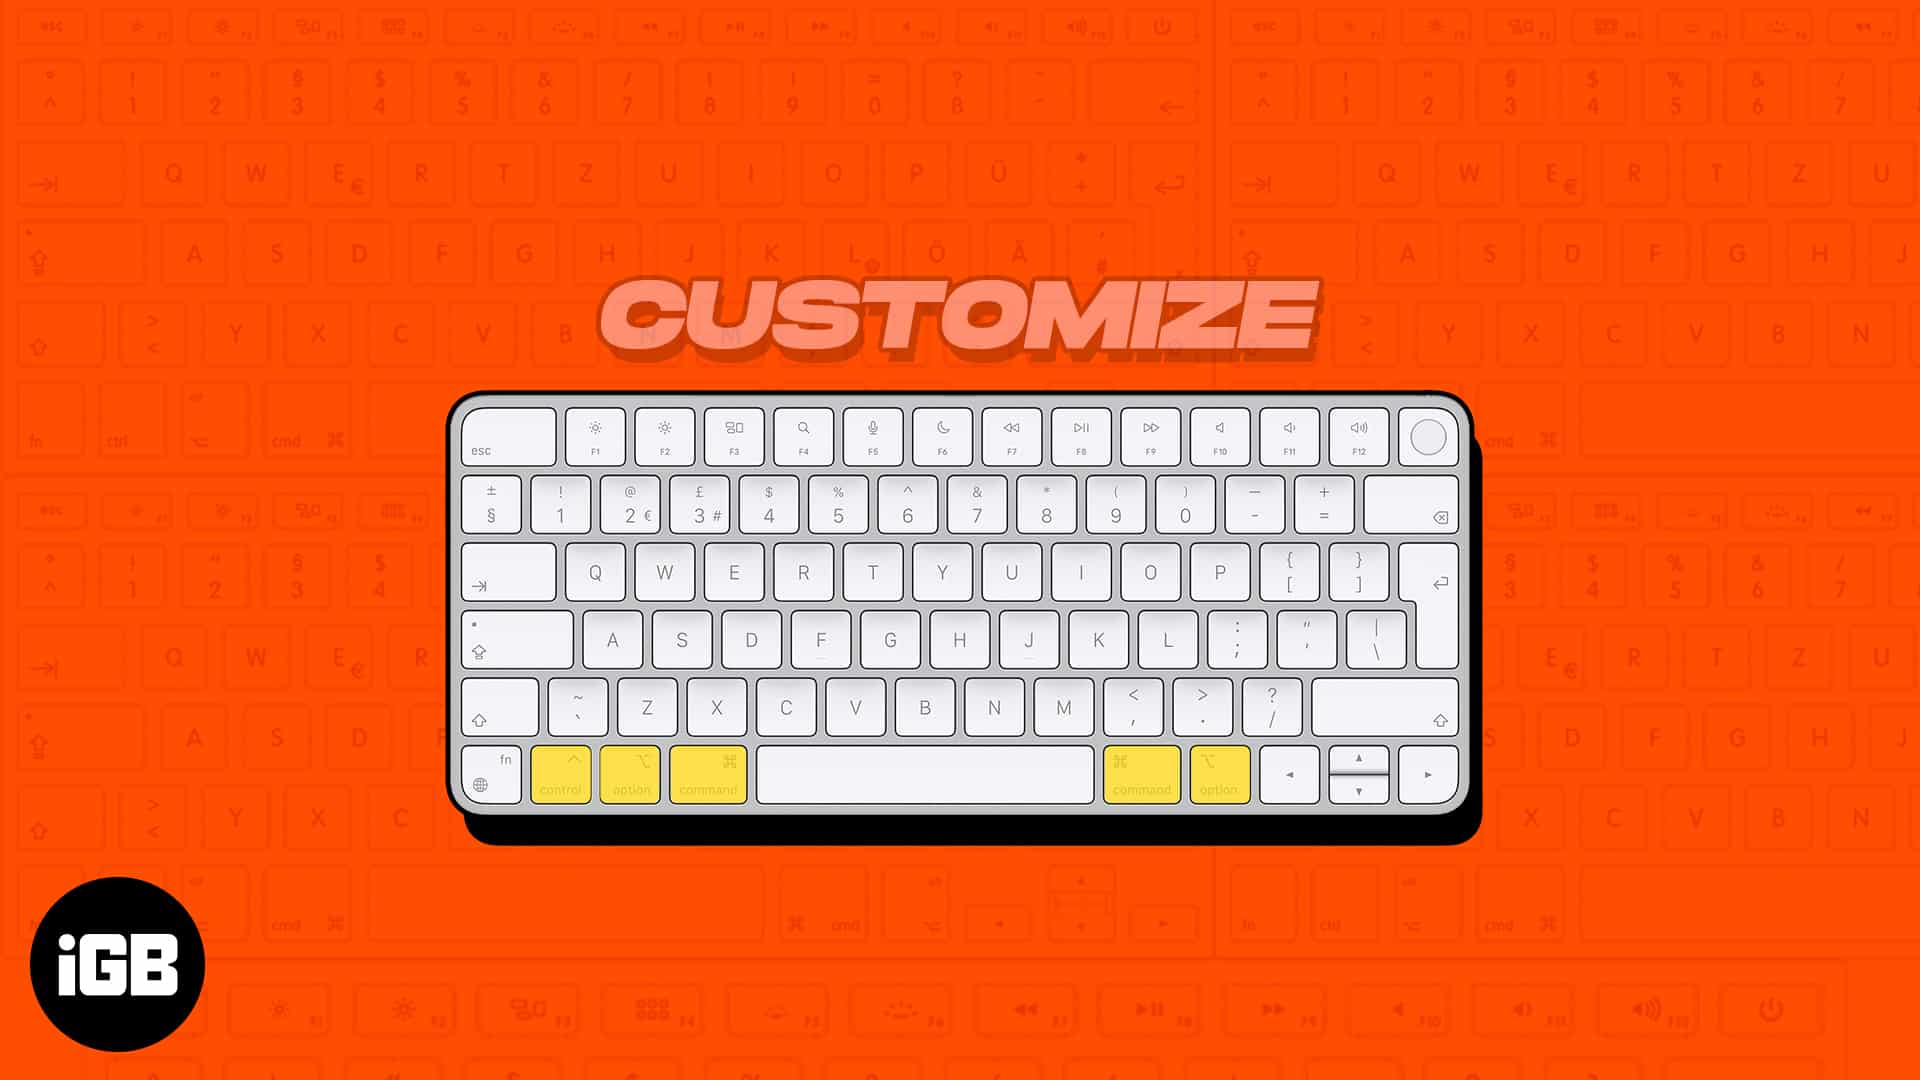 How to customize Mac keyboard settings